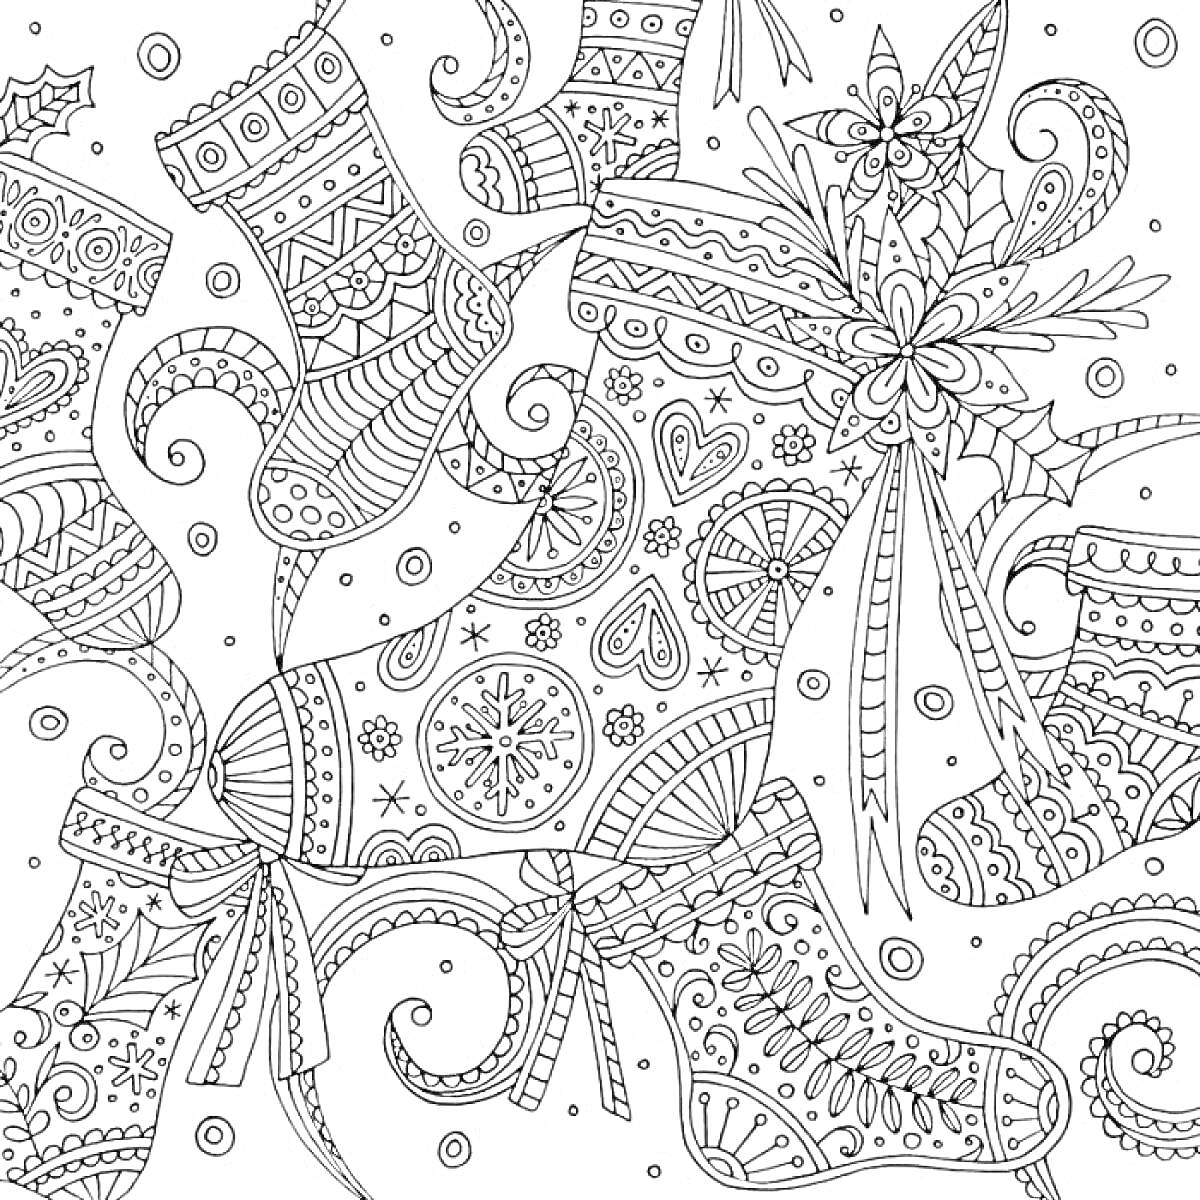 Раскраска Антистресс раскраска - новогодние чулки с узорами, лентами и цветами